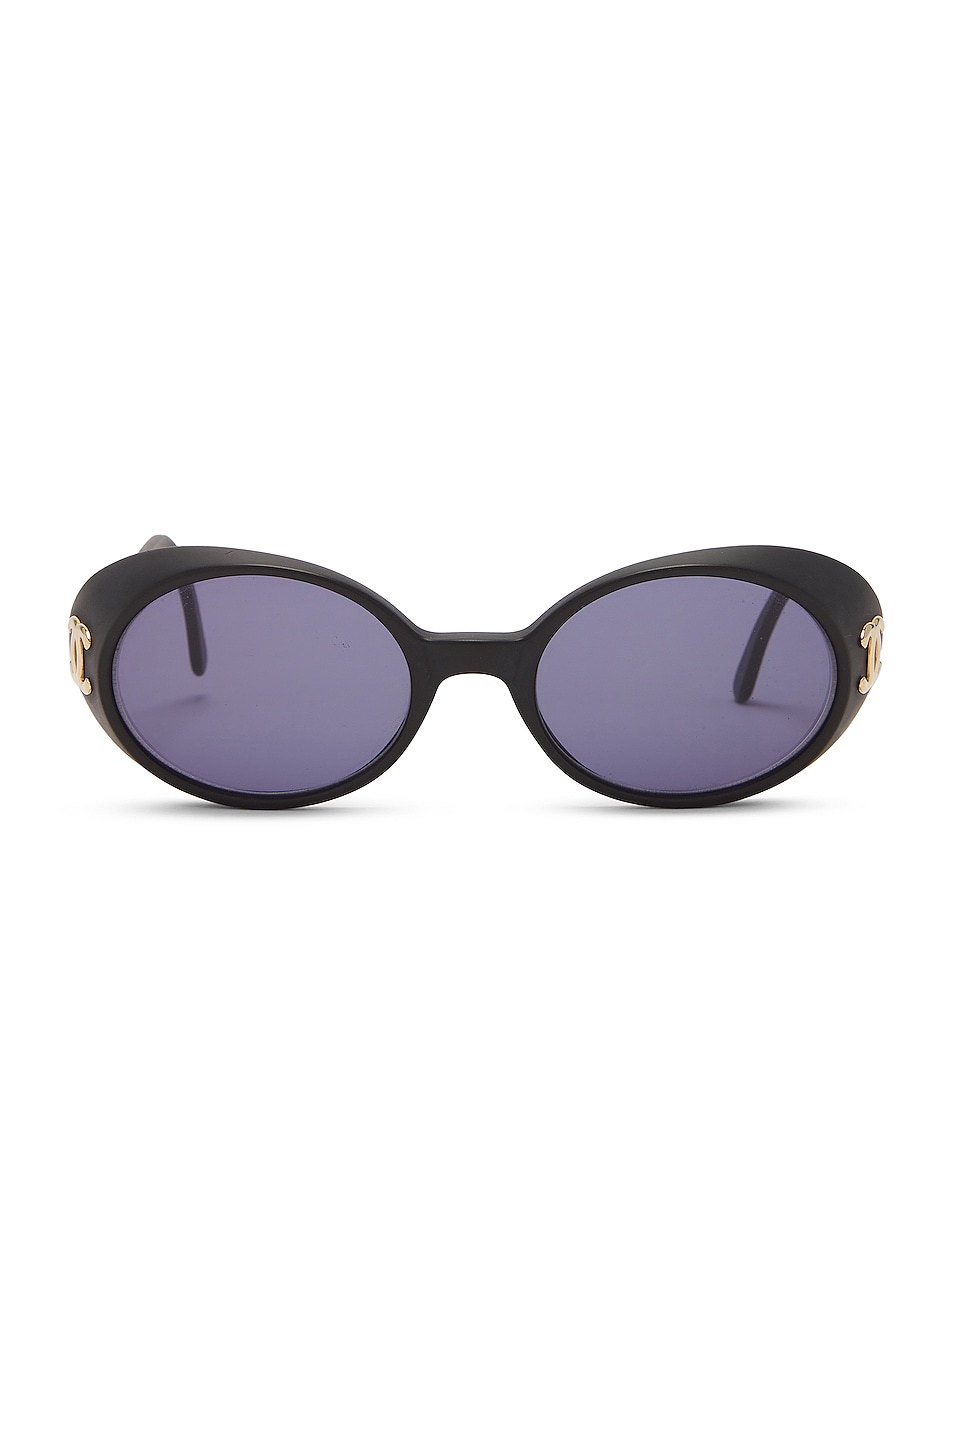 Image 1 of FWRD Renew Chanel Sunglasses in Black